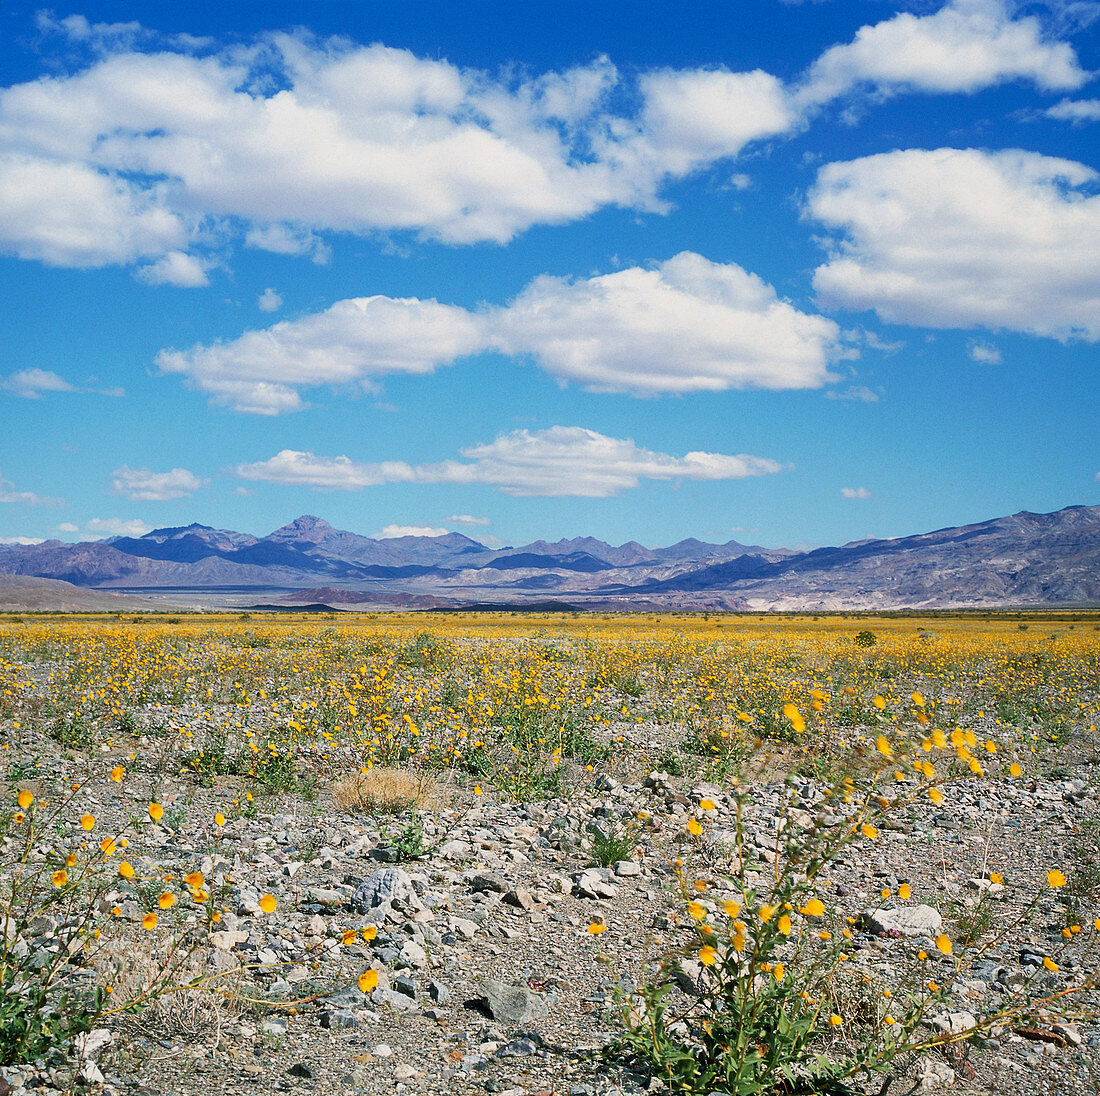 Desert flowers after rain in Death Valley